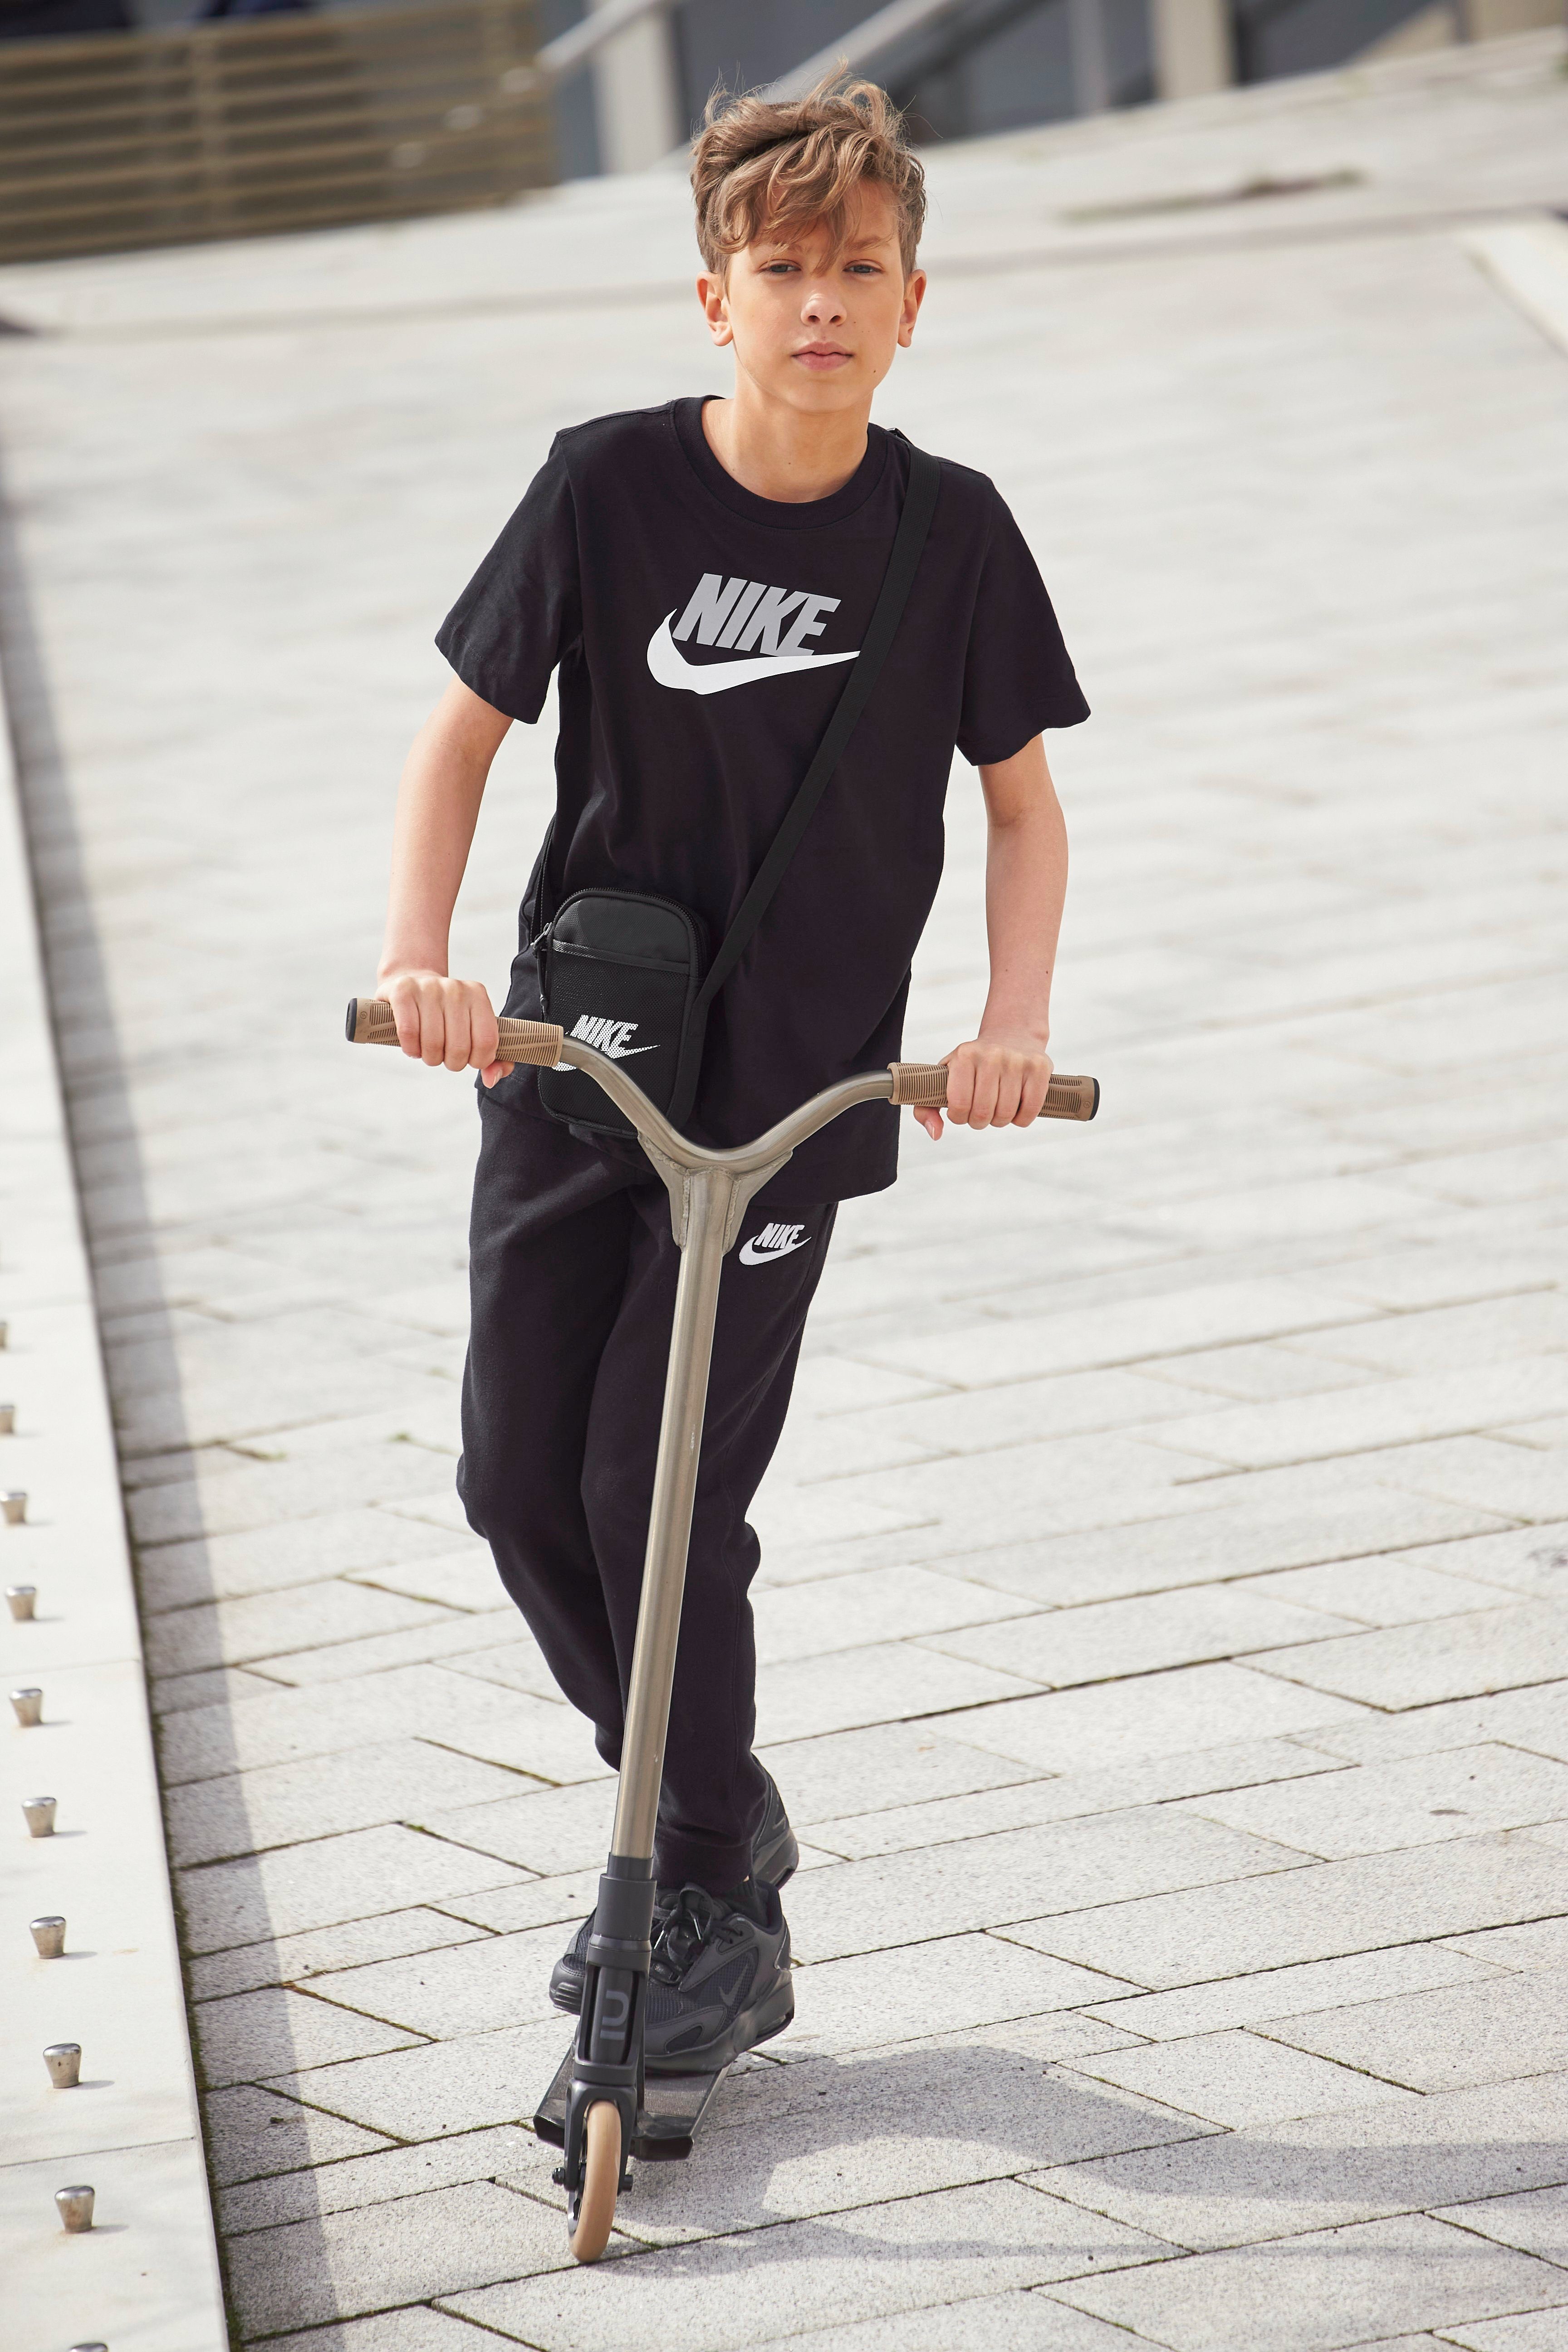 T-Shirt COTTON KIDS' BIG schwarz-grau-weiß Nike T-SHIRT Sportswear